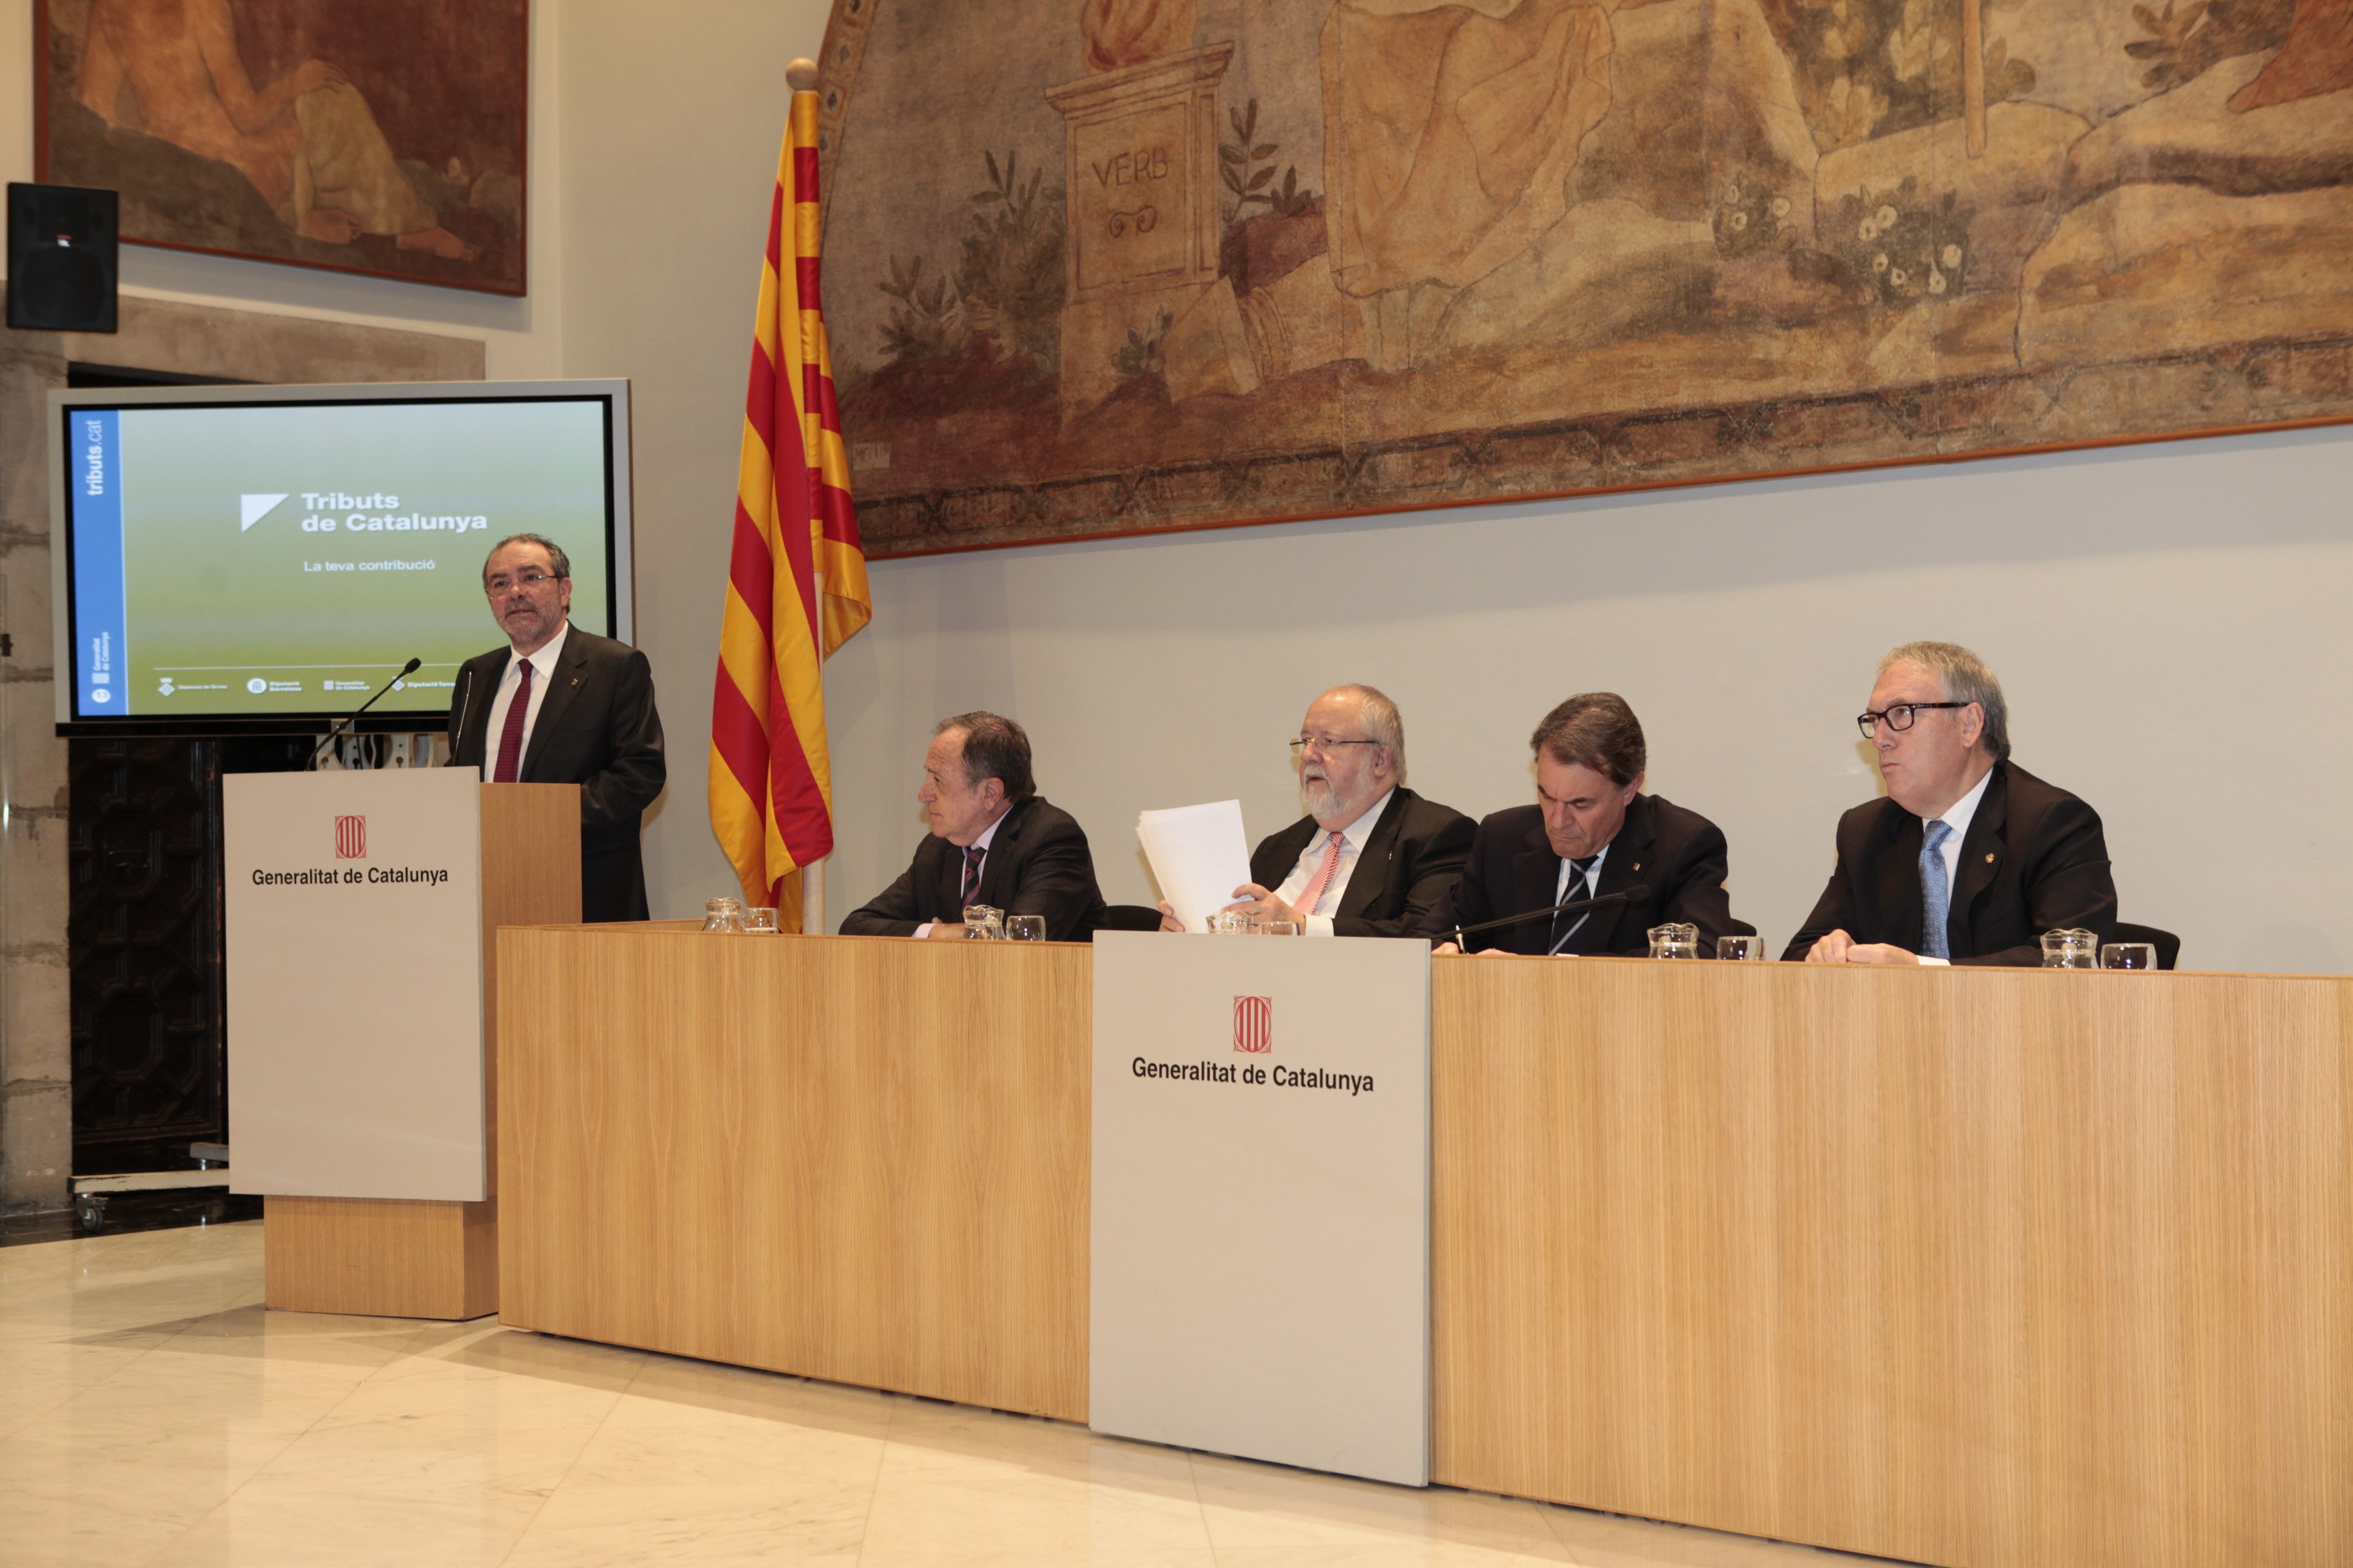 Presentación del portal Tributs de Catalunya